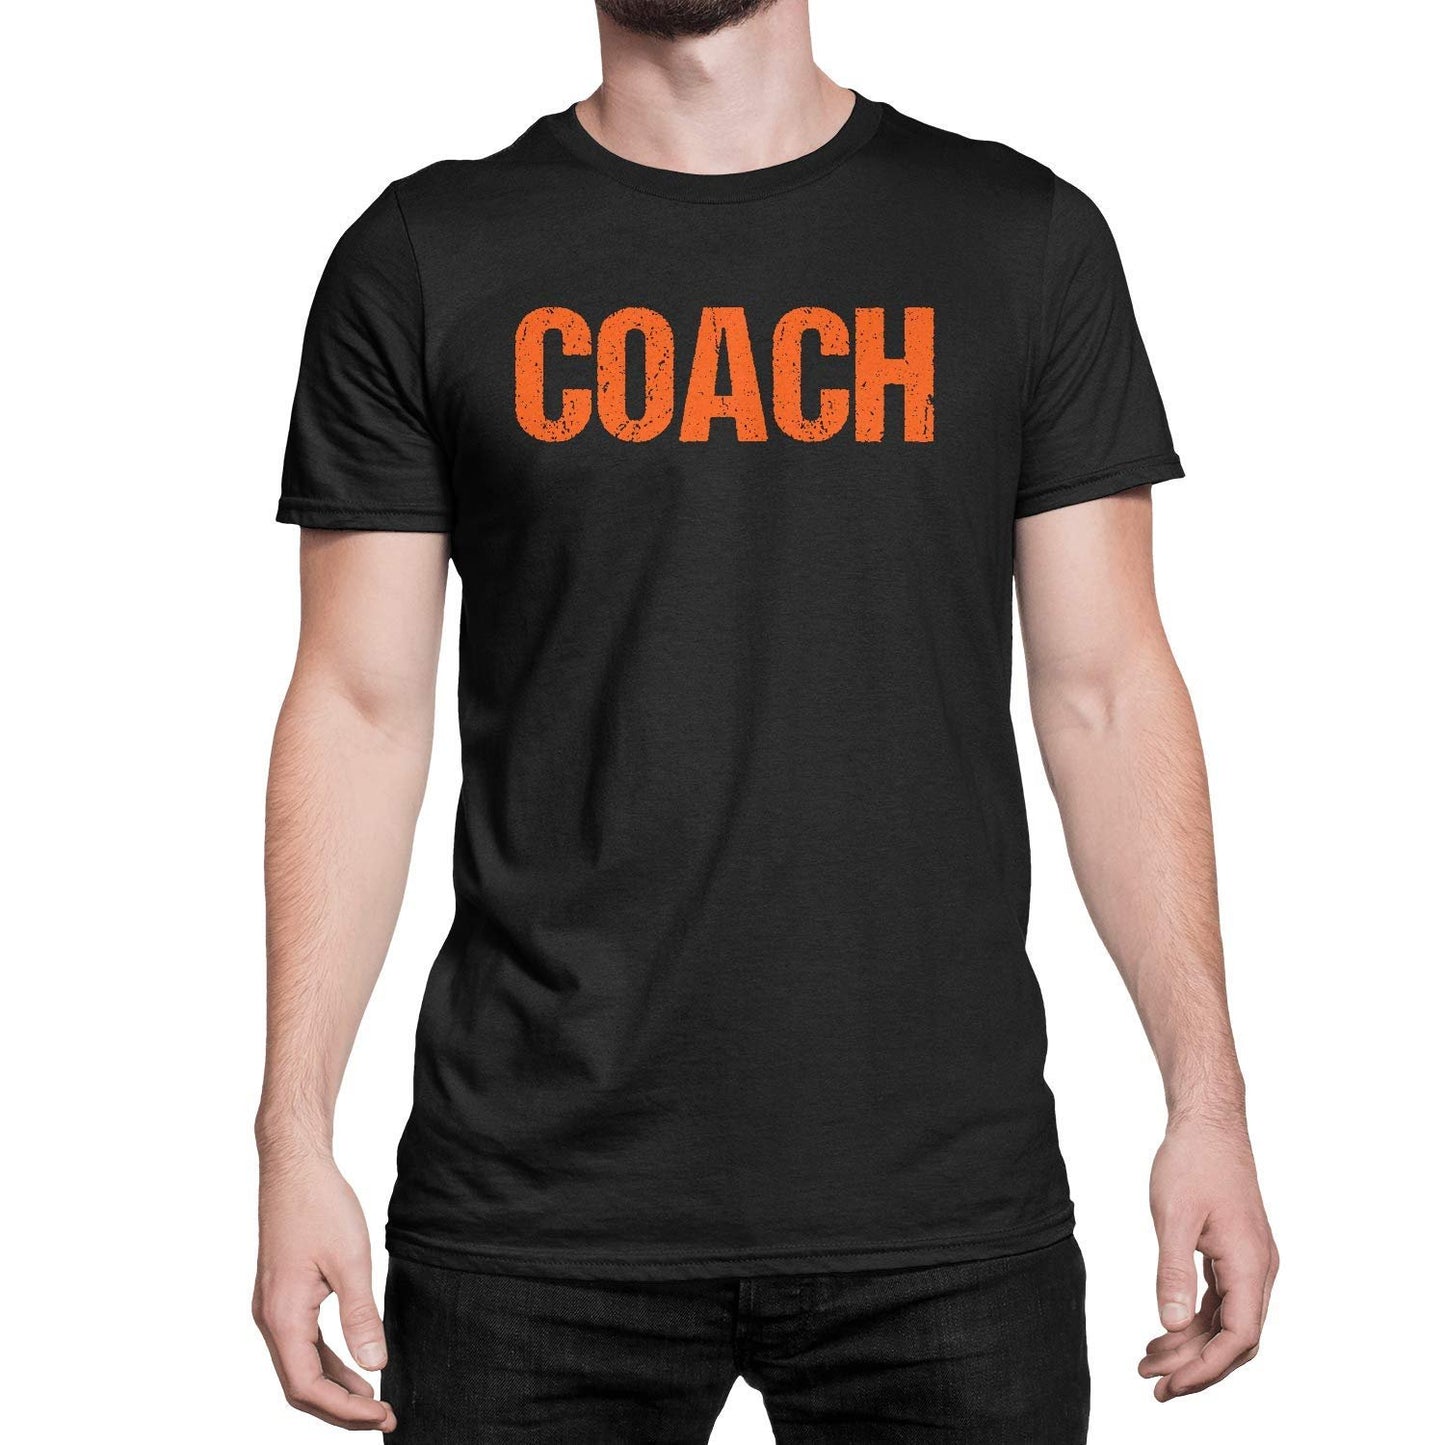 Coach T-Shirt Adult Mens Tee Shirt Front Screen Printed Coaching Tshirt Black & Orange